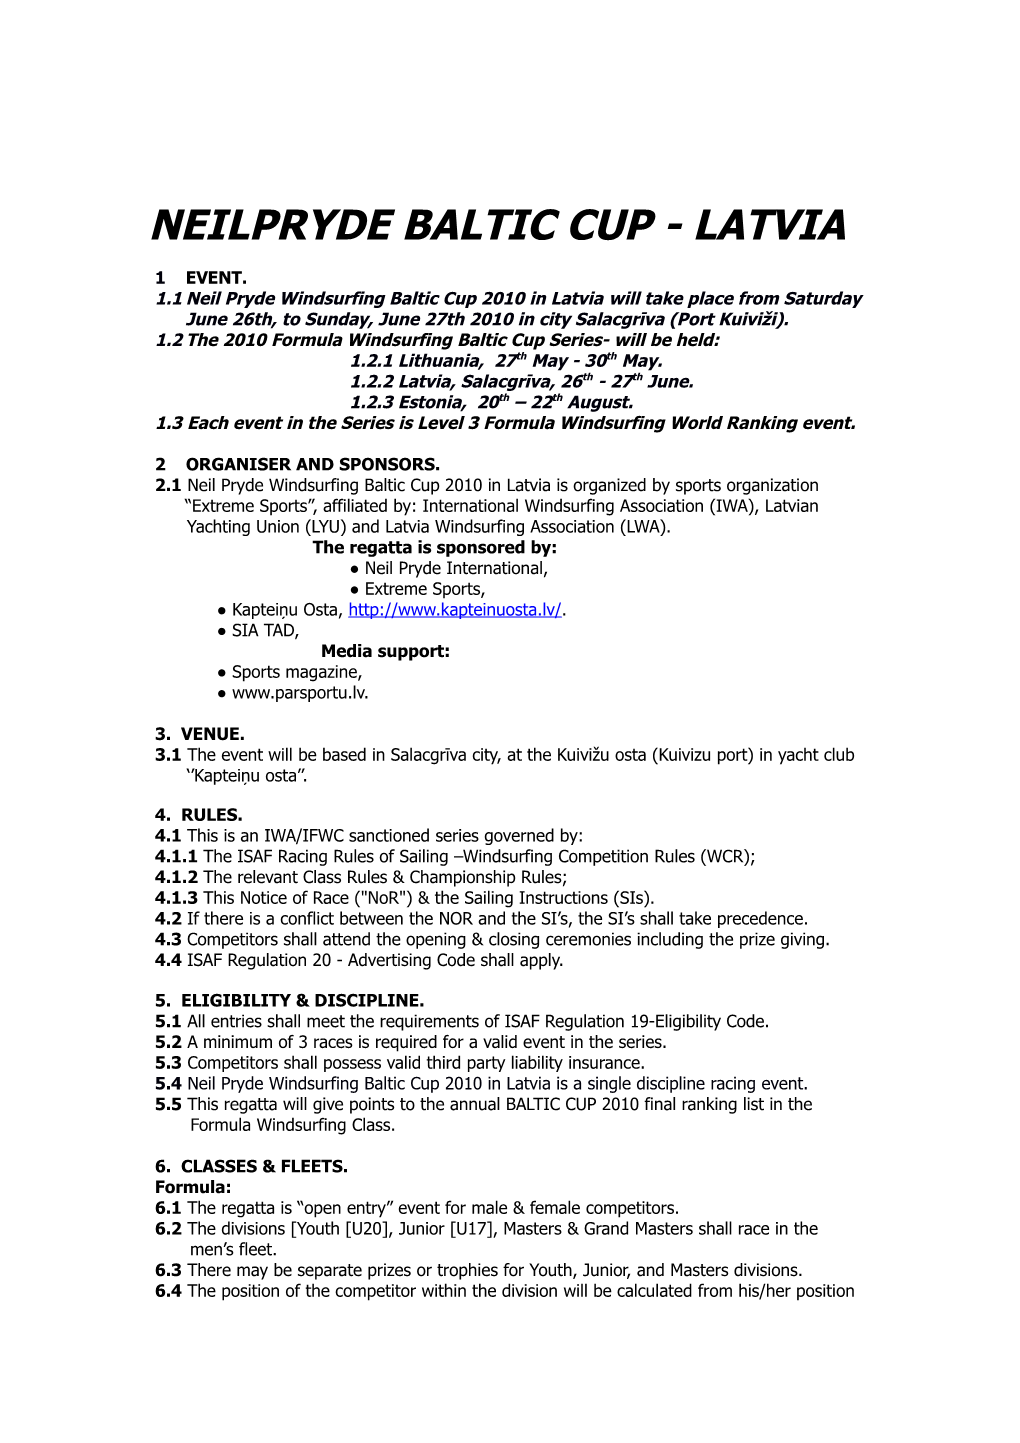 Neilpryde Baltic Cup 2009